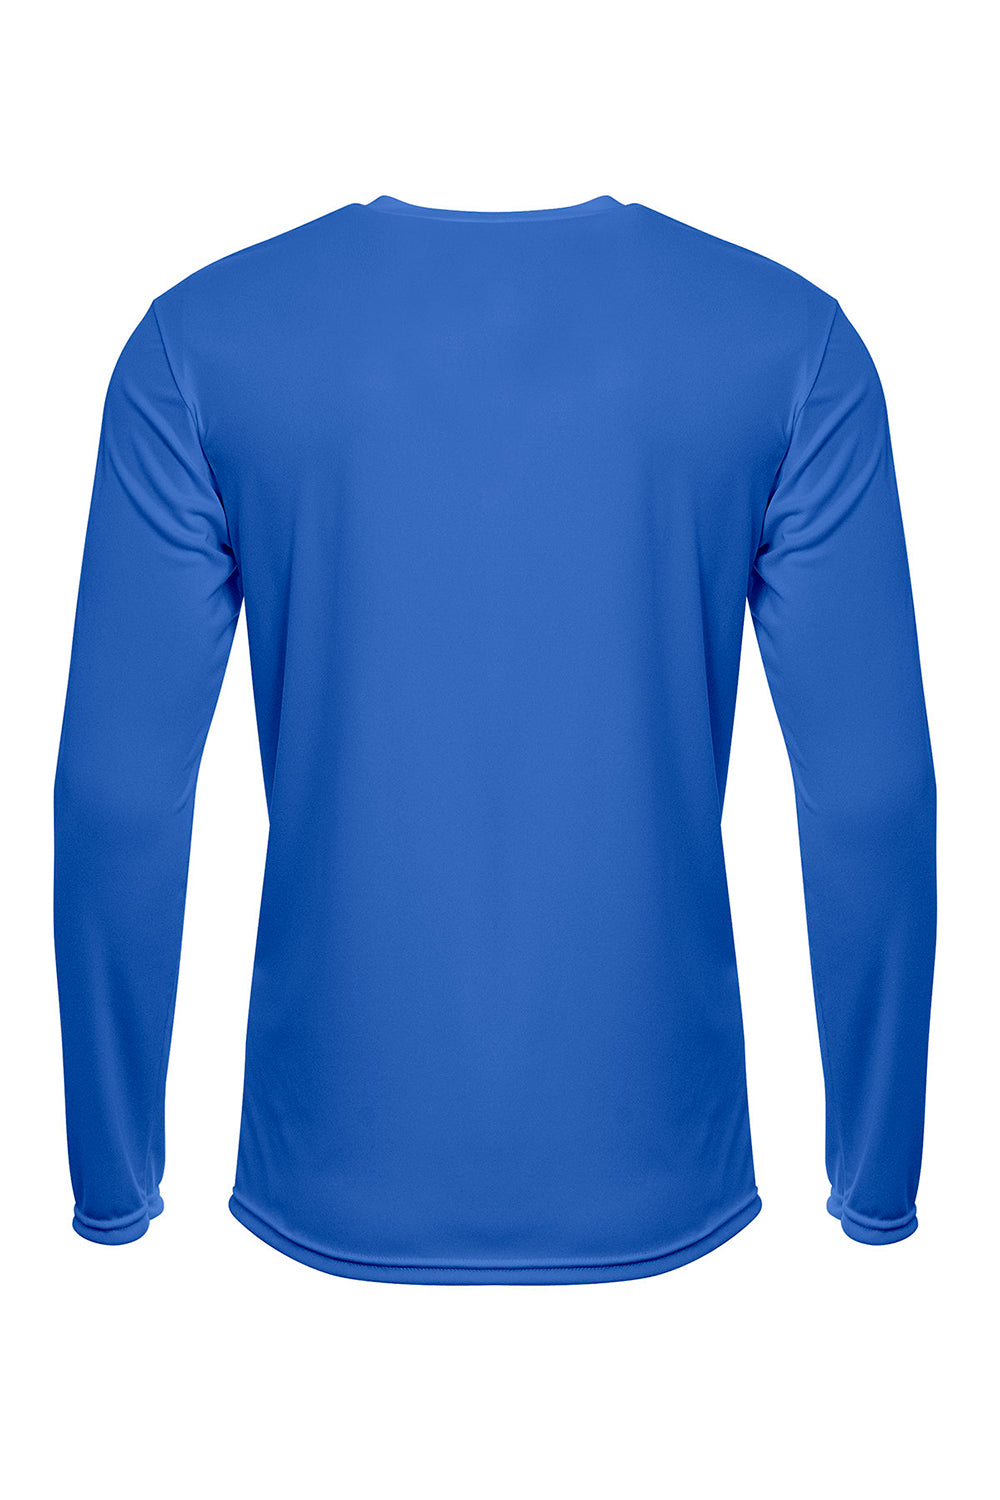 A4 N3425 Mens Sprint Moisture Wicking Long Sleeve Crewneck T-Shirt Royal Blue Flat Back